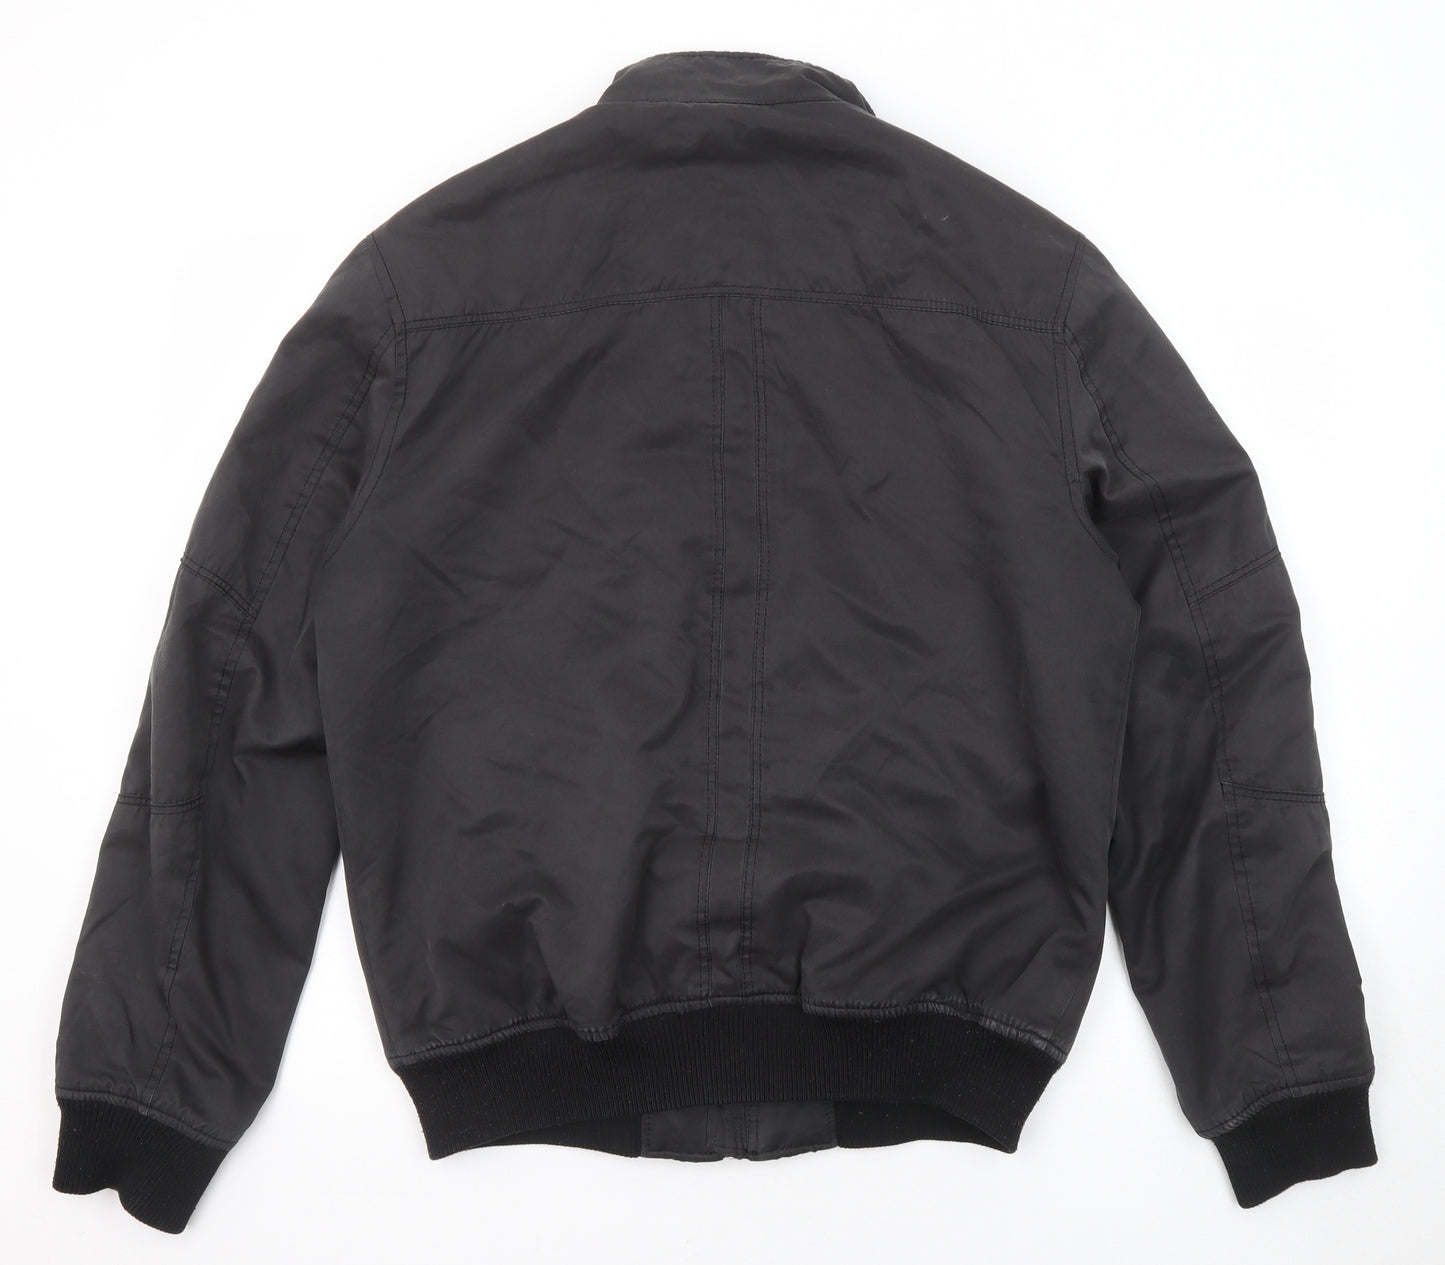 H&M Mens Grey Bomber Jacket Jacket Size M Zip